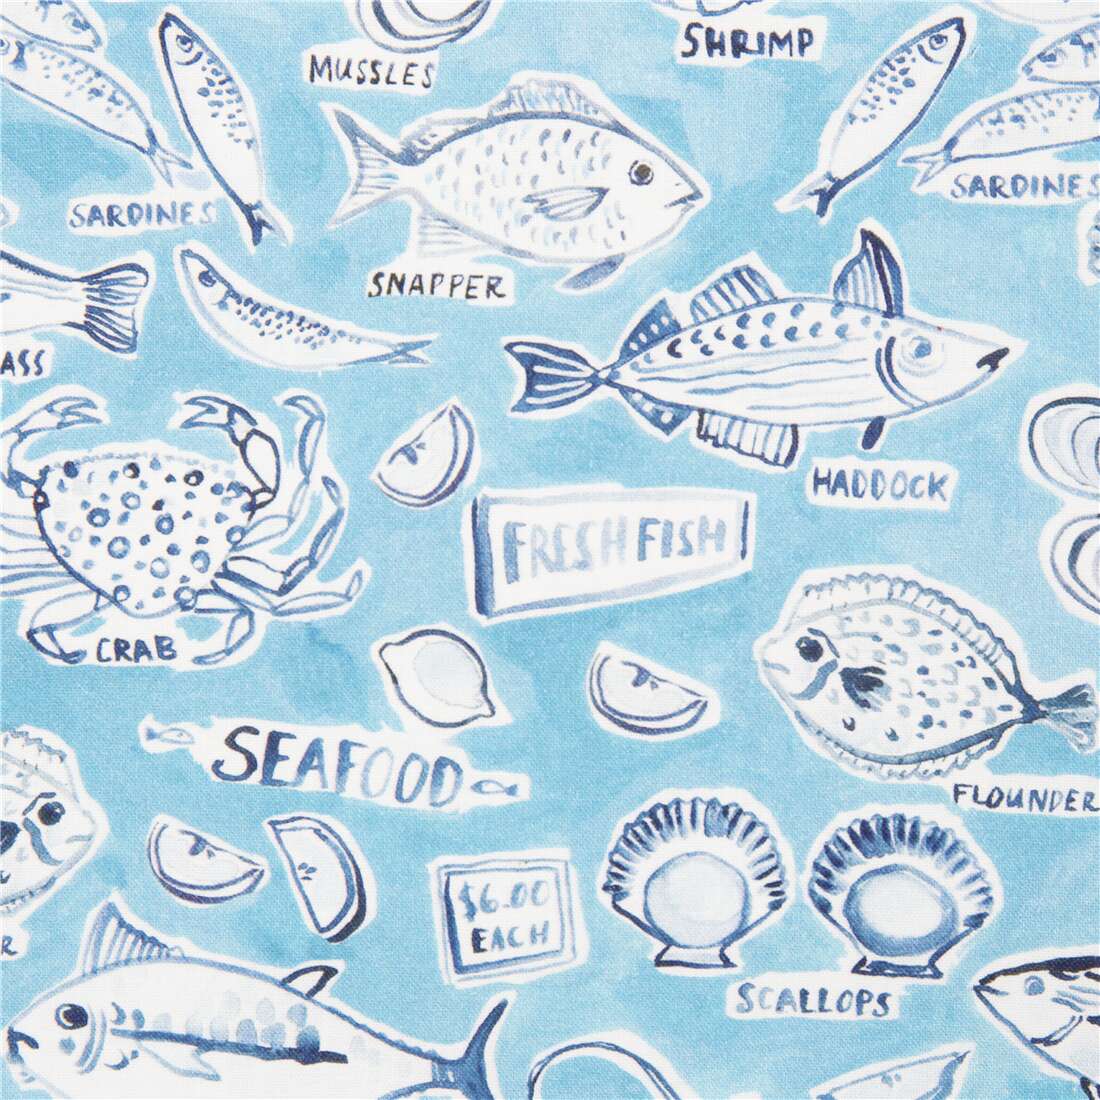 Illustrated Watercolour Fish Market Shellfish Fabric by Dear Stella -  modeS4u